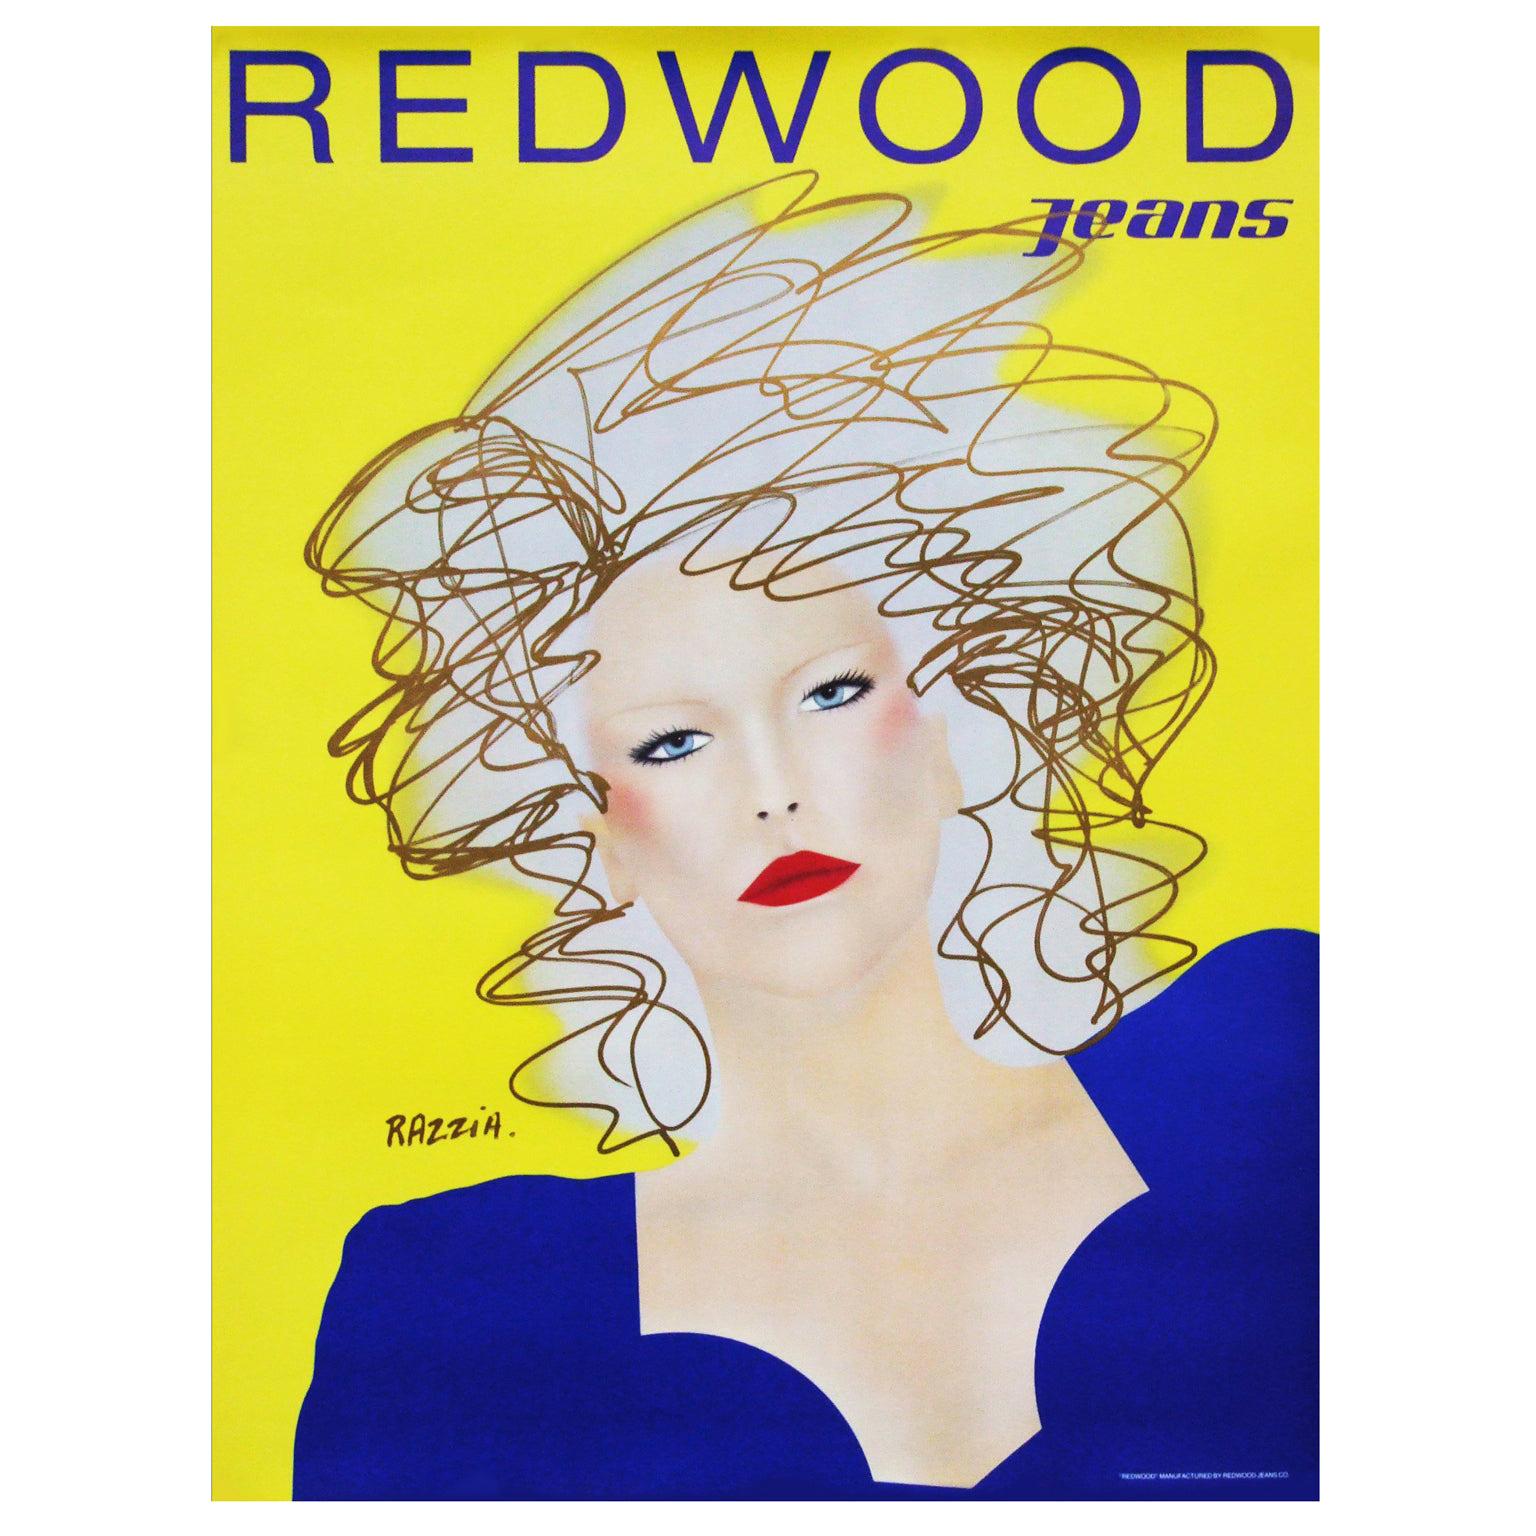 1980s "Redwood Jeans" Poster by Razzia Pop Art Fashion Illustration